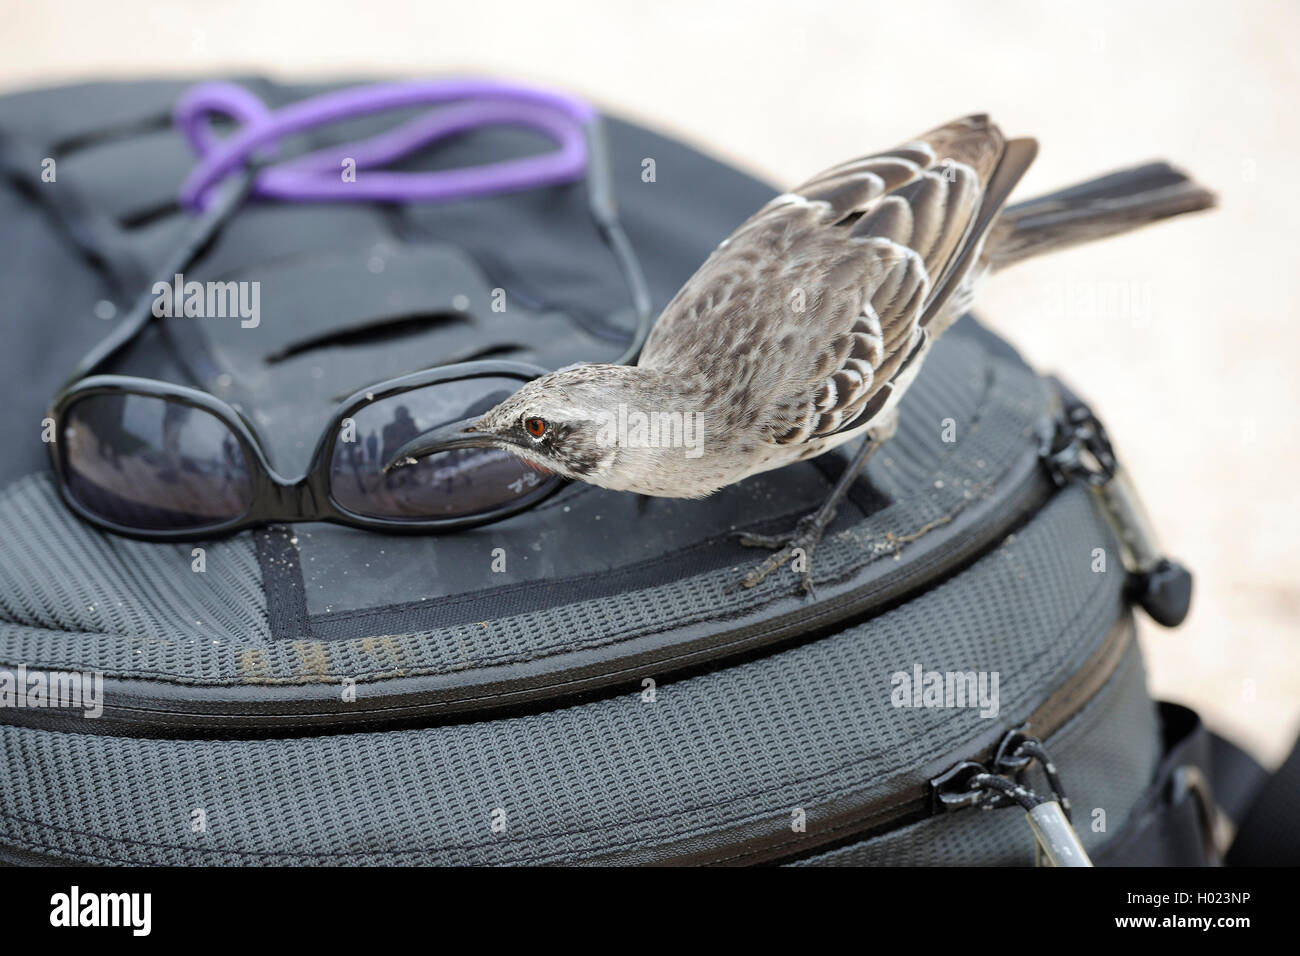 Hood mockingbird, Espanola mockingbird (Nesomimus parvulus macdonaldi, Nesomimus macdonaldi), is interested in sunglasses on a photo backpack, Ecuador, Galapagos Islands, Espanola Stock Photo